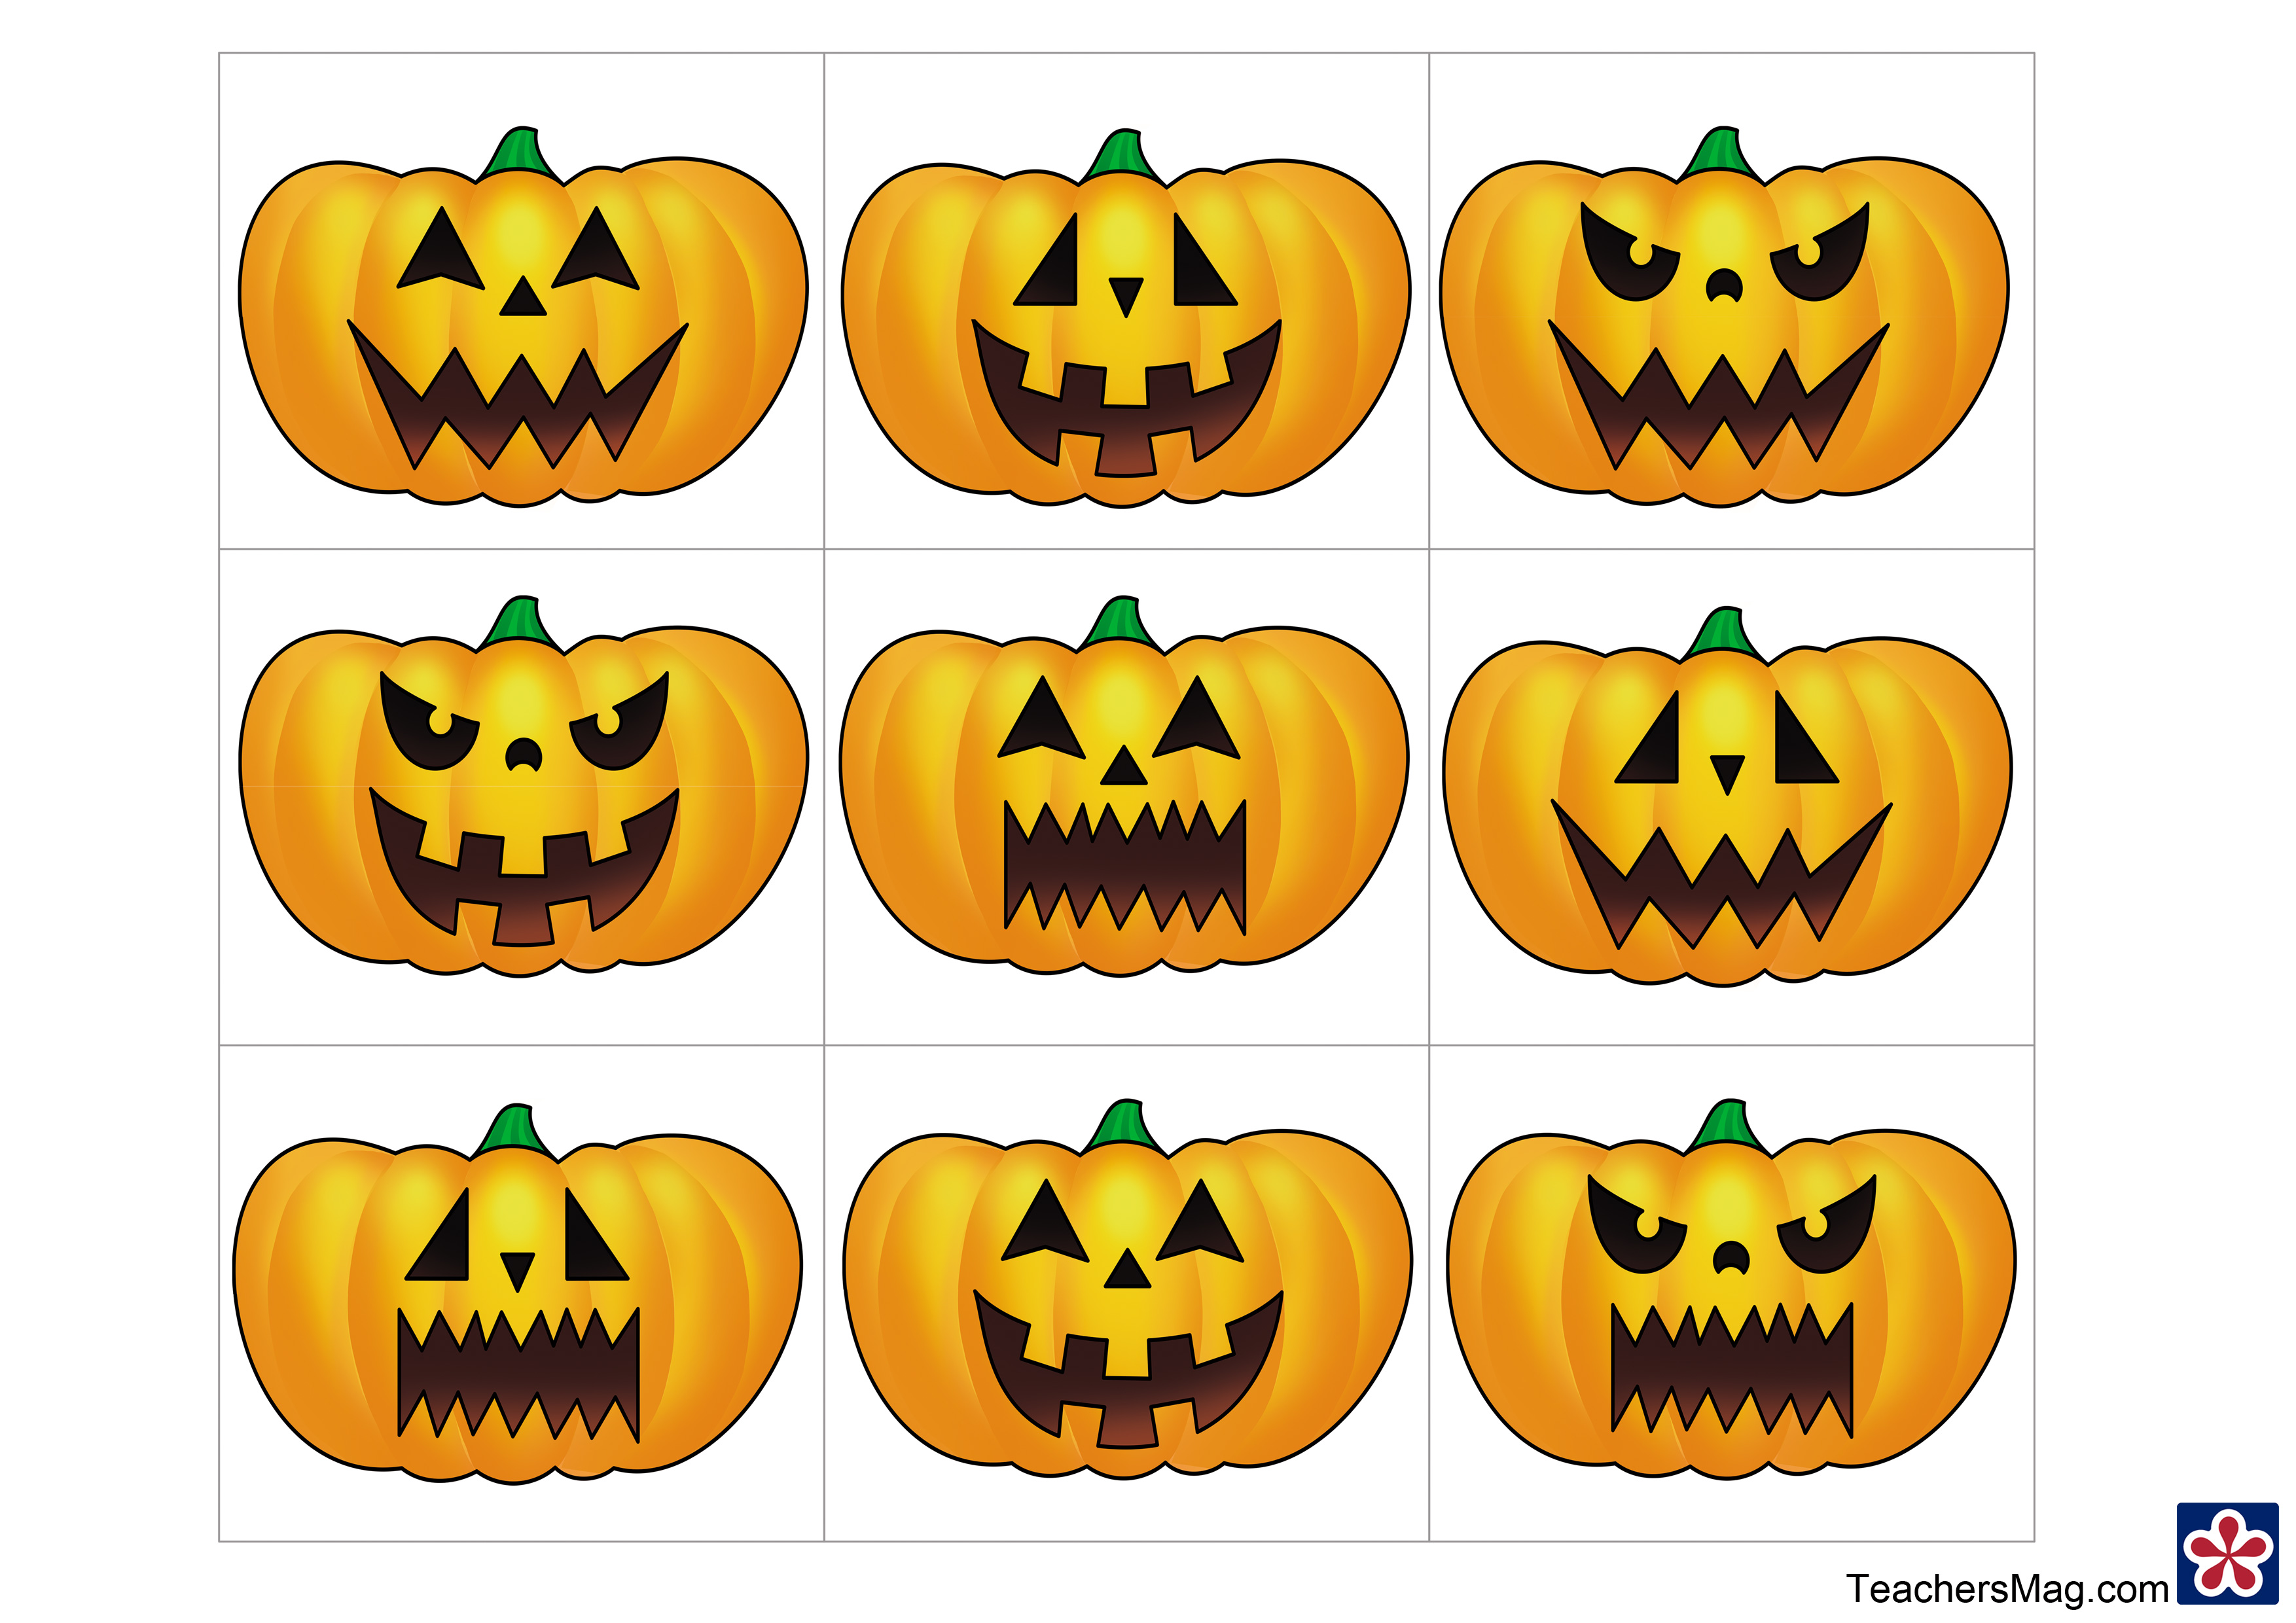 halloween-pumpkin-pattern-activities-teachersmag